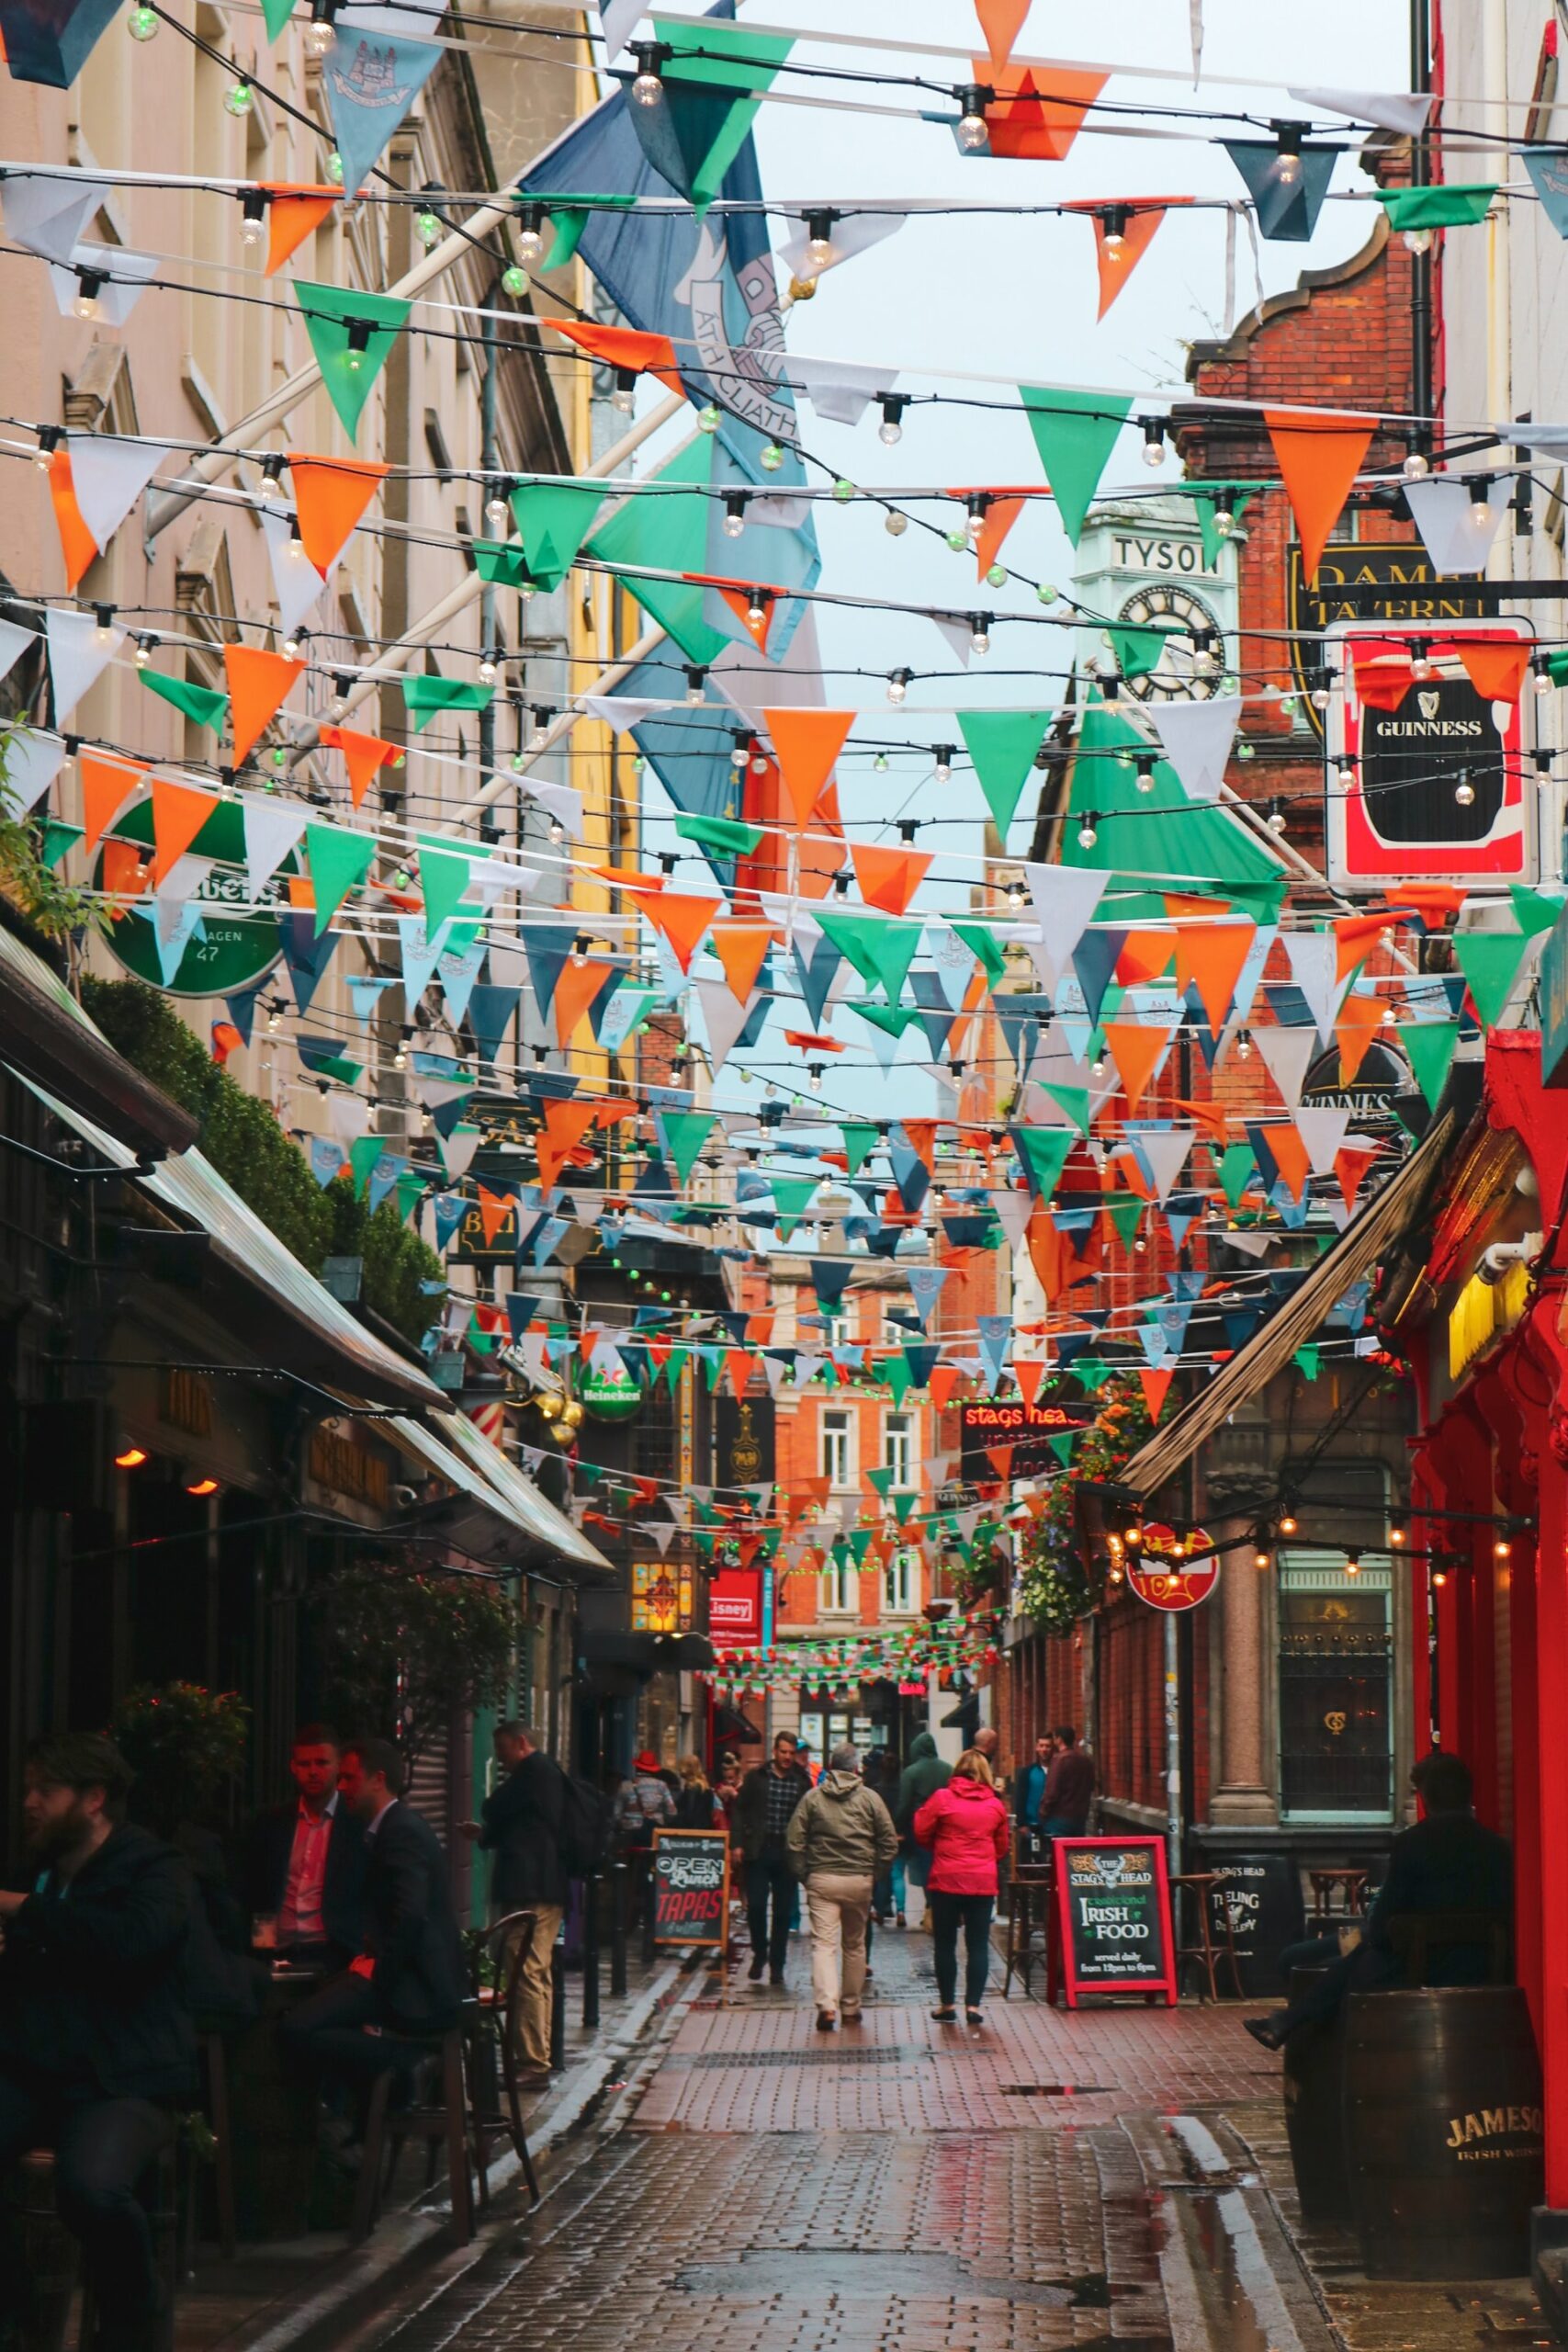 Lola-Palmer-Travel-Blog-The-Best-Destinations-To-Visit-In-Europe-In-Spring-Dublin-Ireland-Photo-by-Anna-Church-via-Unsplash.jpg